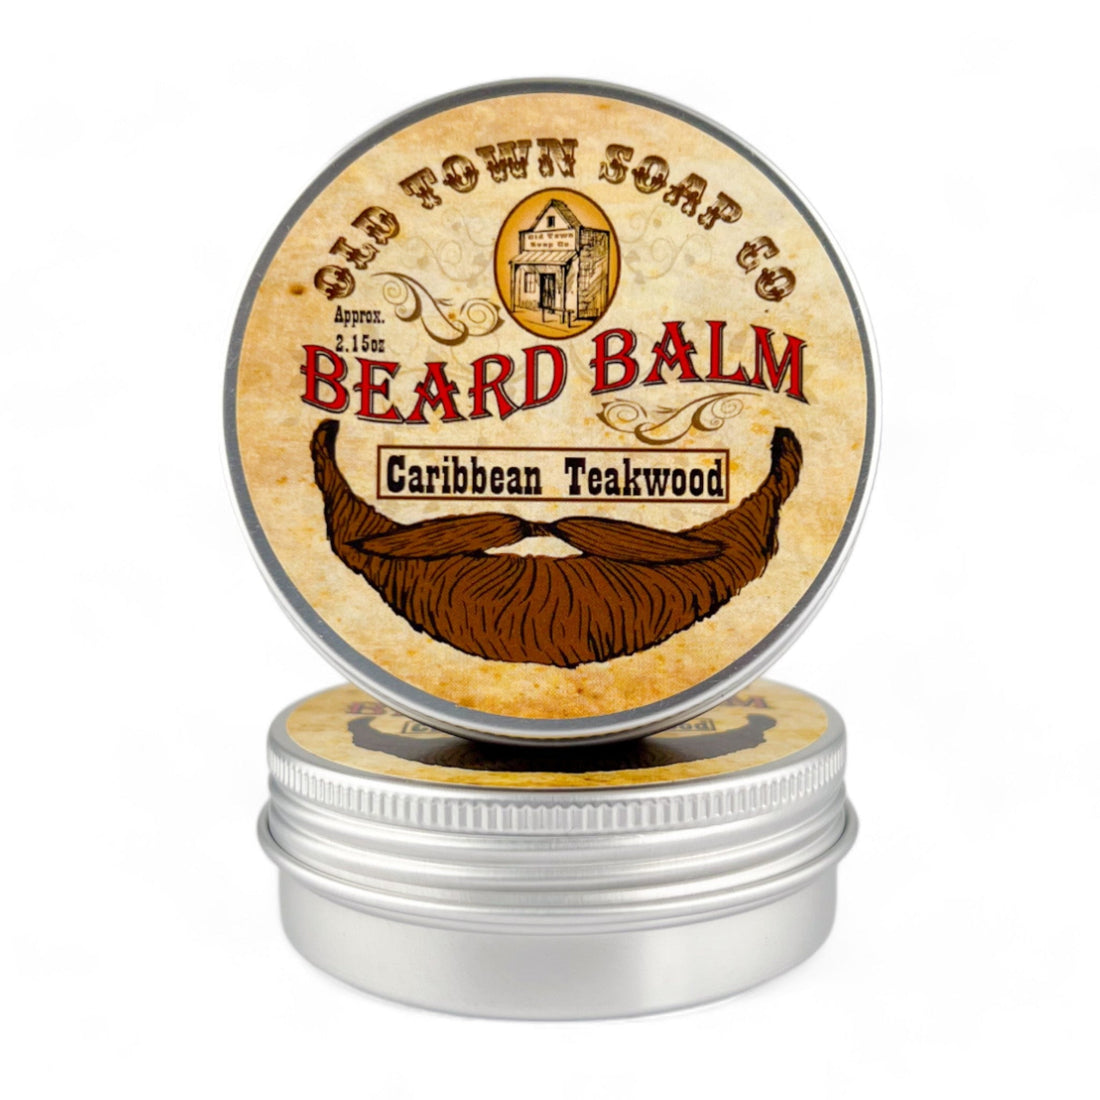 Caribbean Teakwood Beard Balm - Old Town Soap Co.